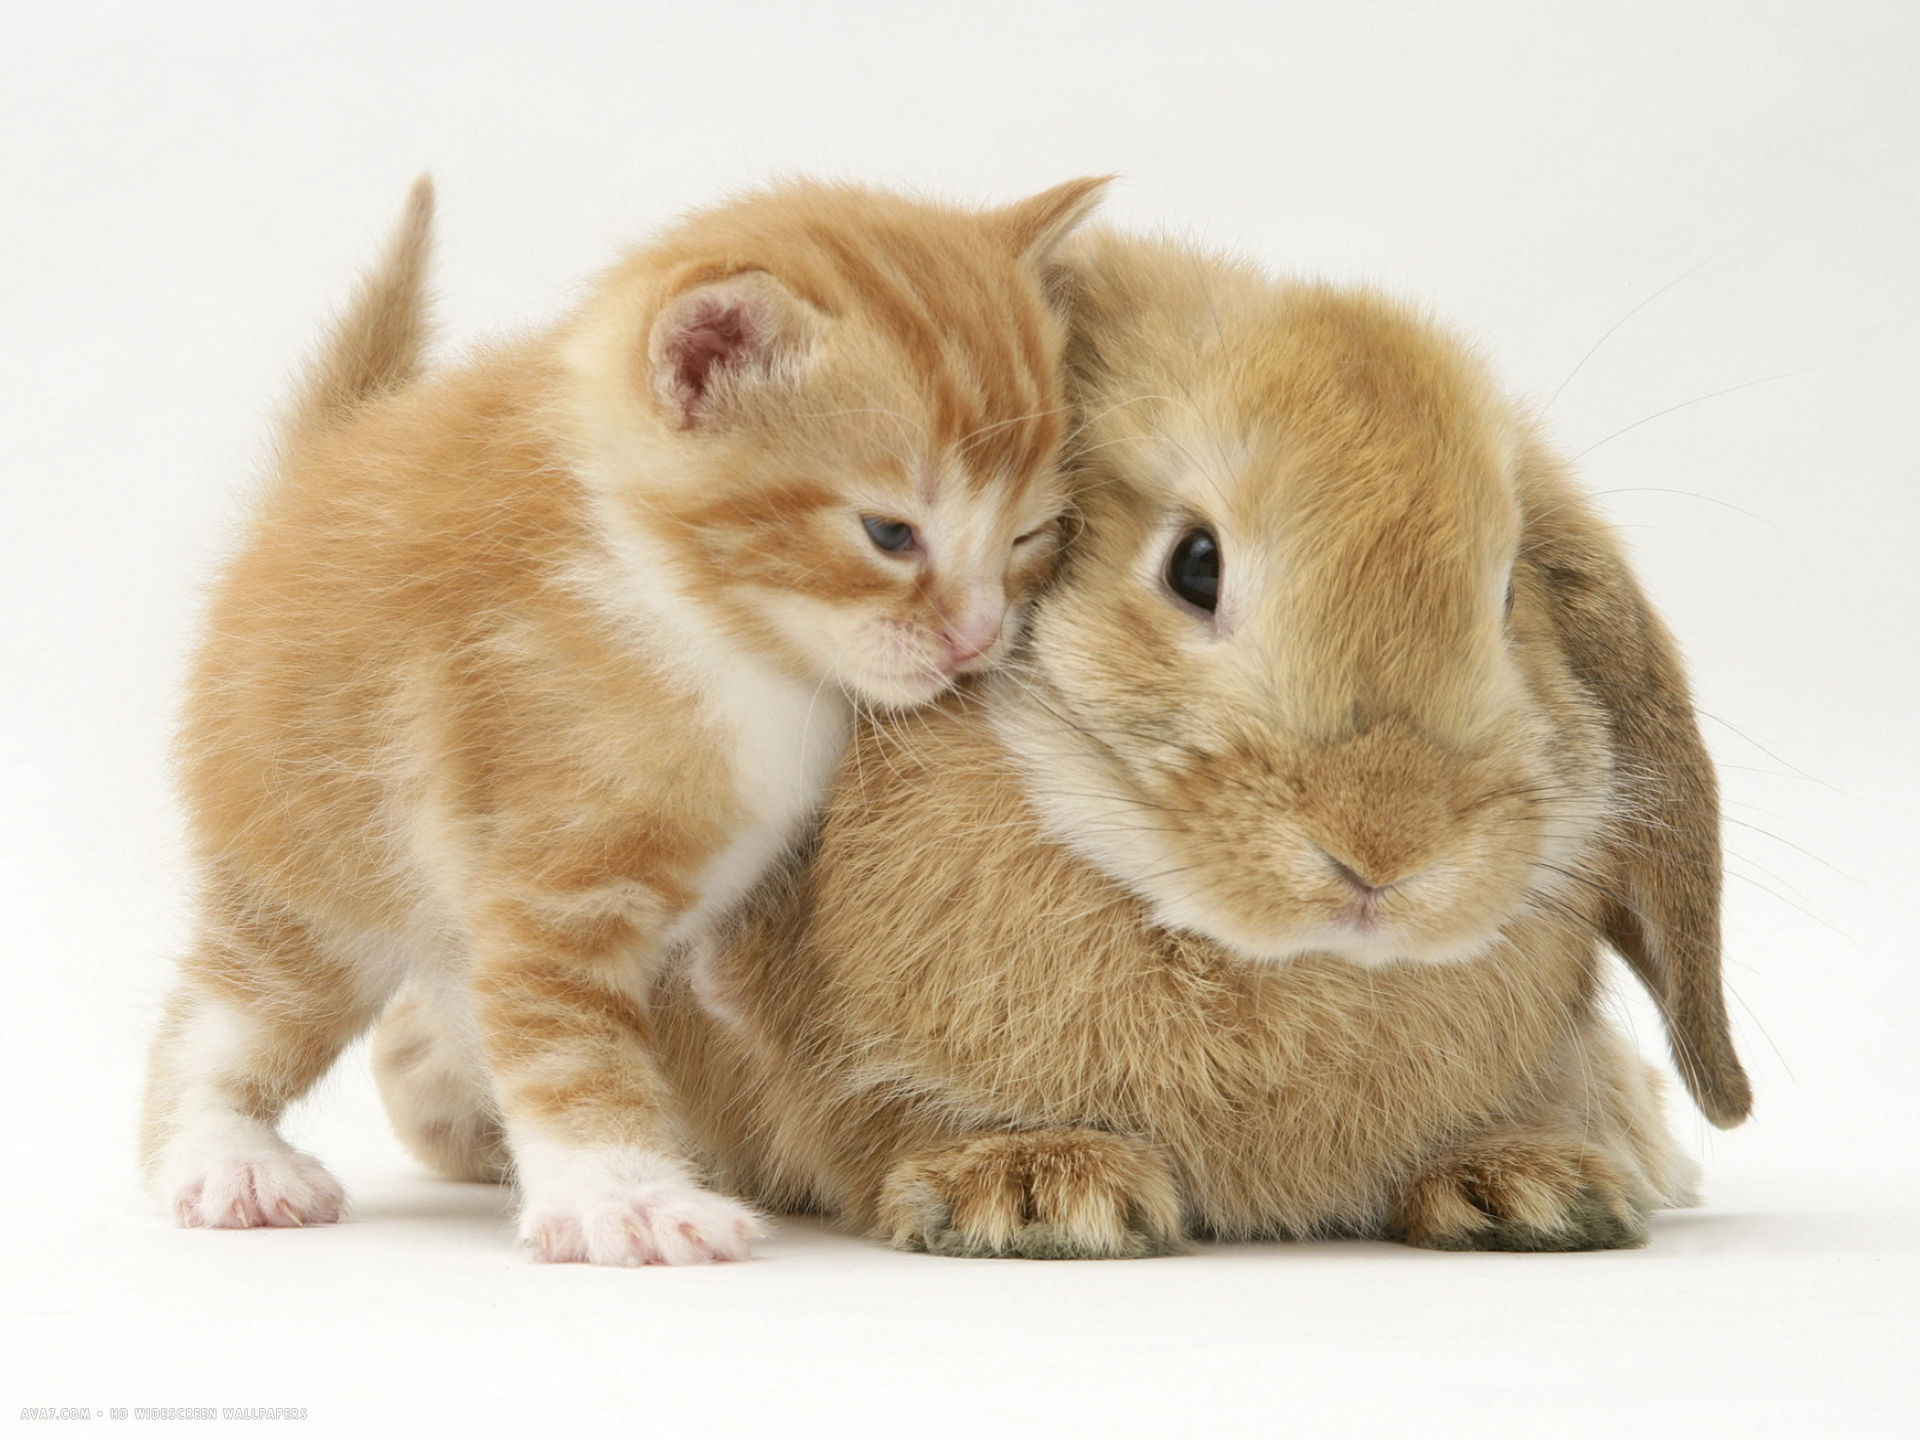 Domestic kitten felis catus next to bunny domestic rabbit